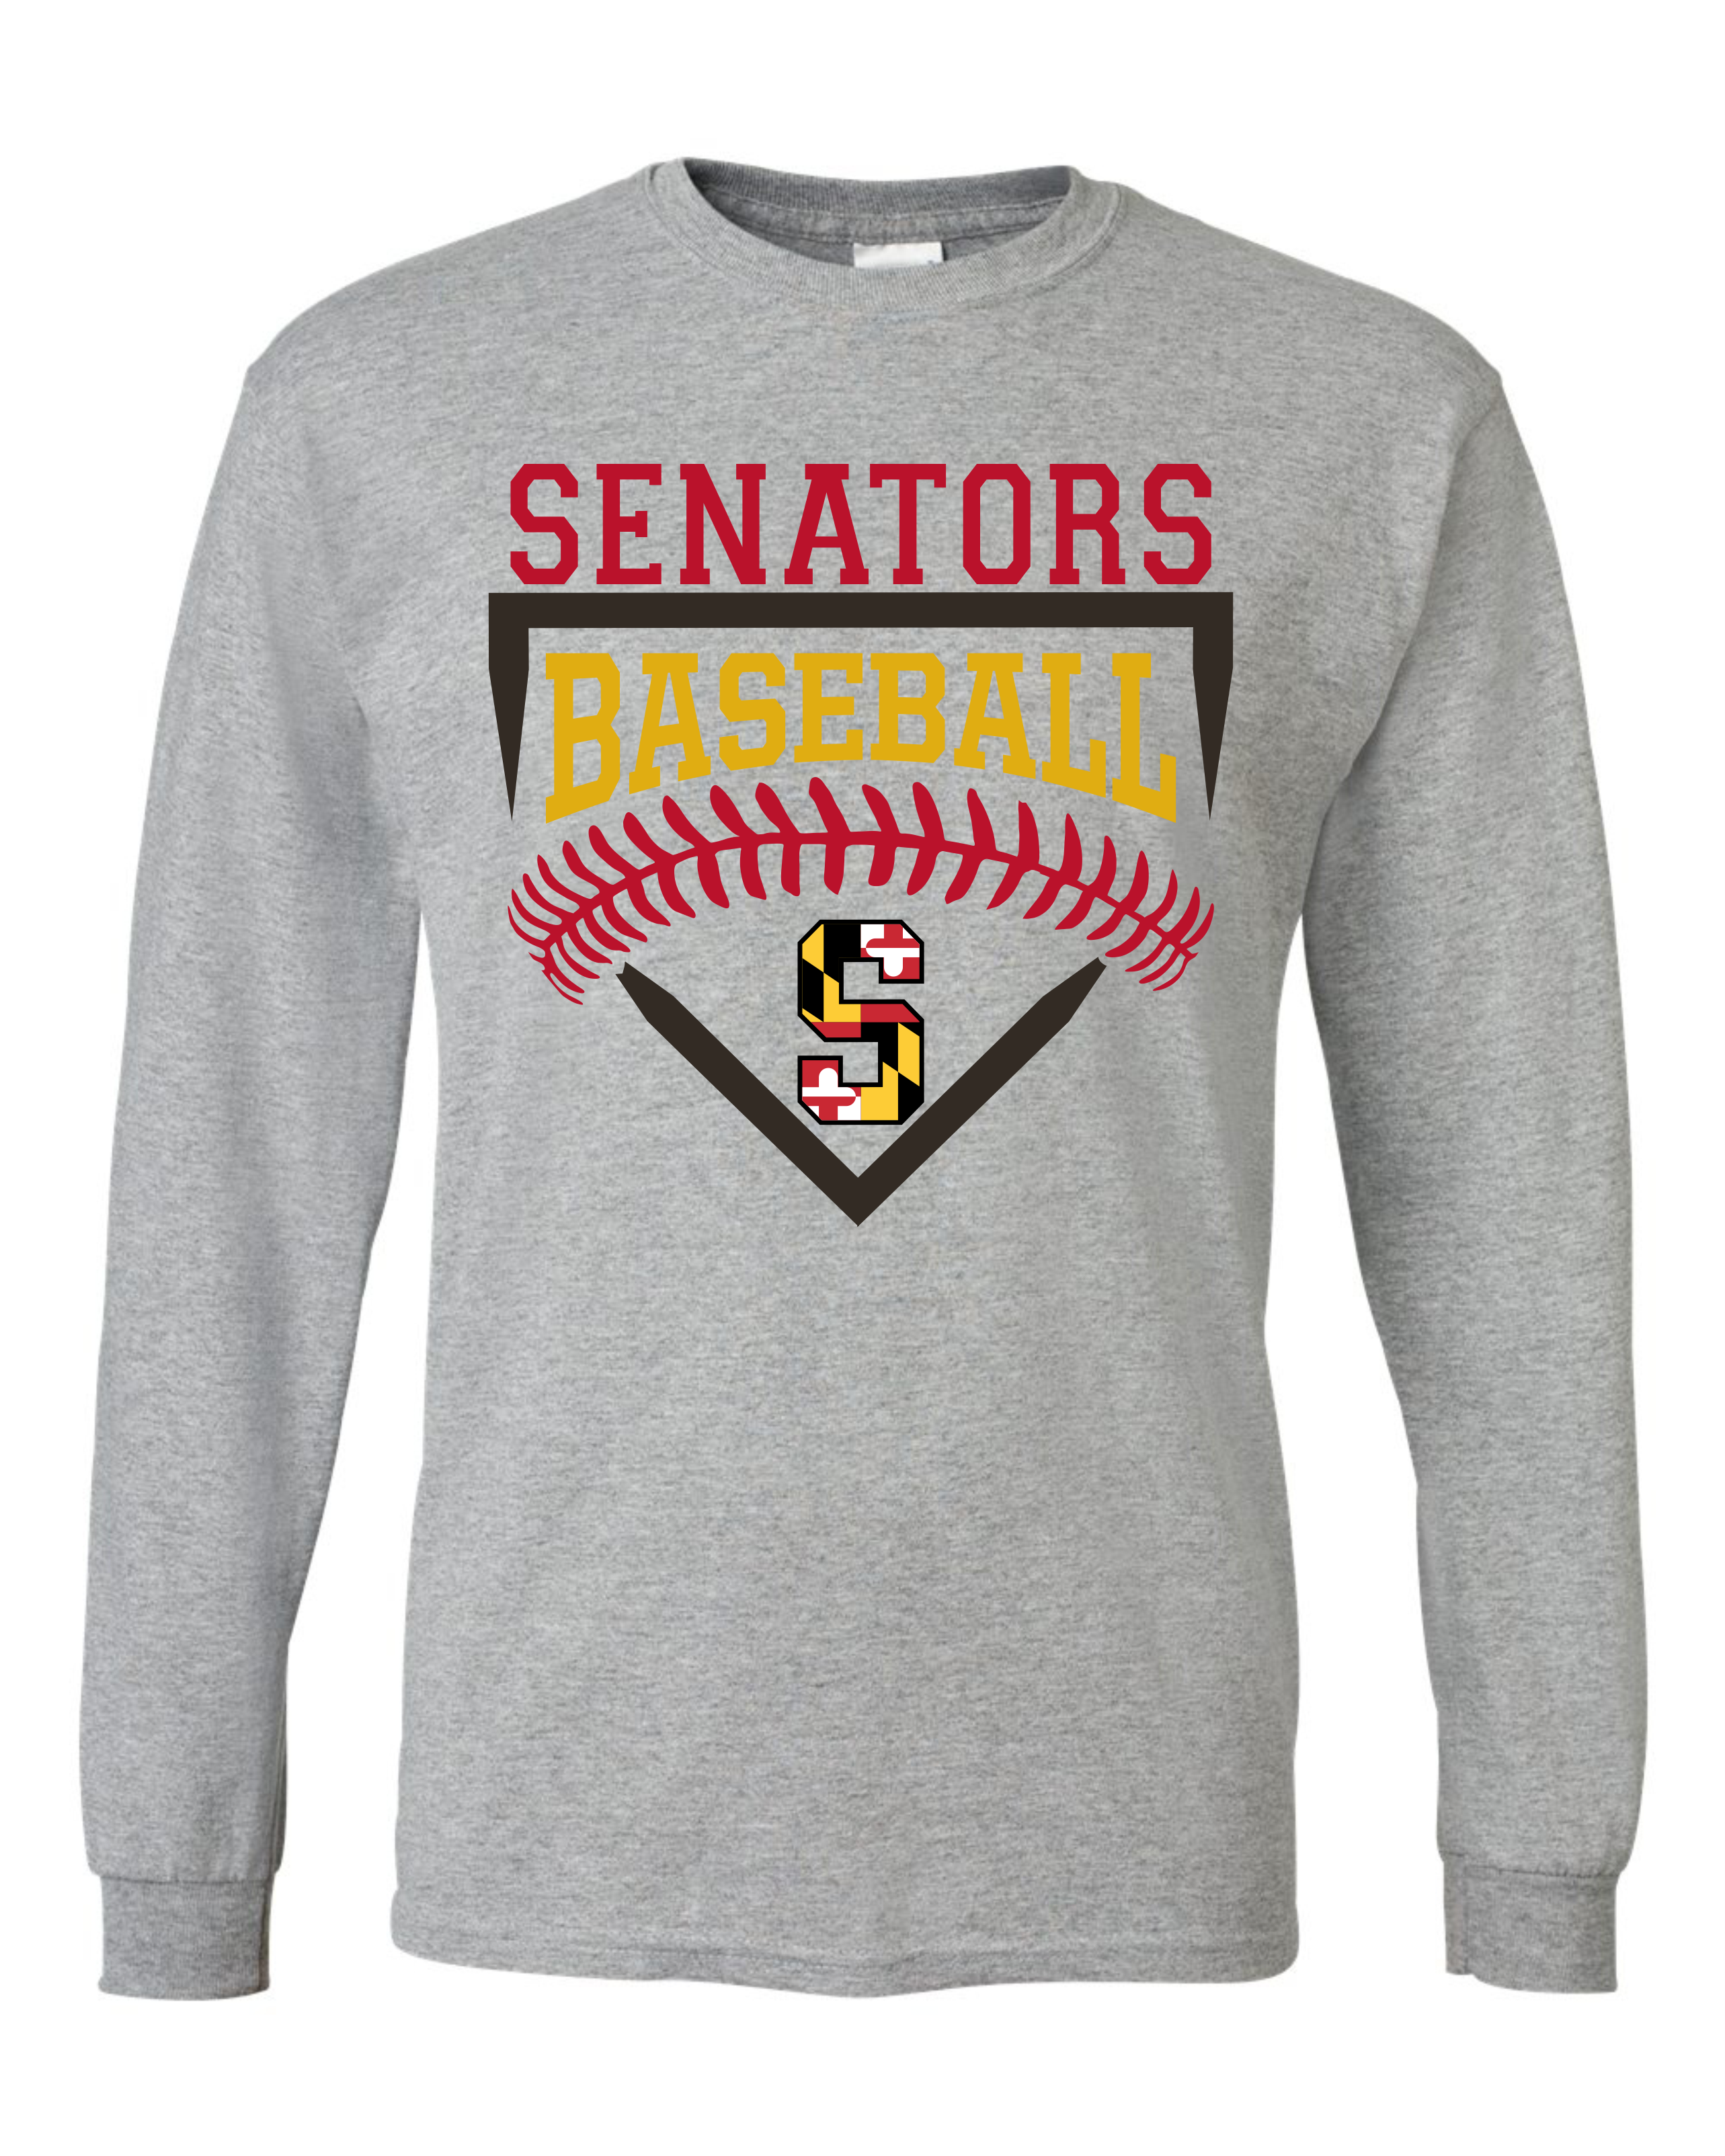 Senators Long Sleeve T-shirt Home Plate Design